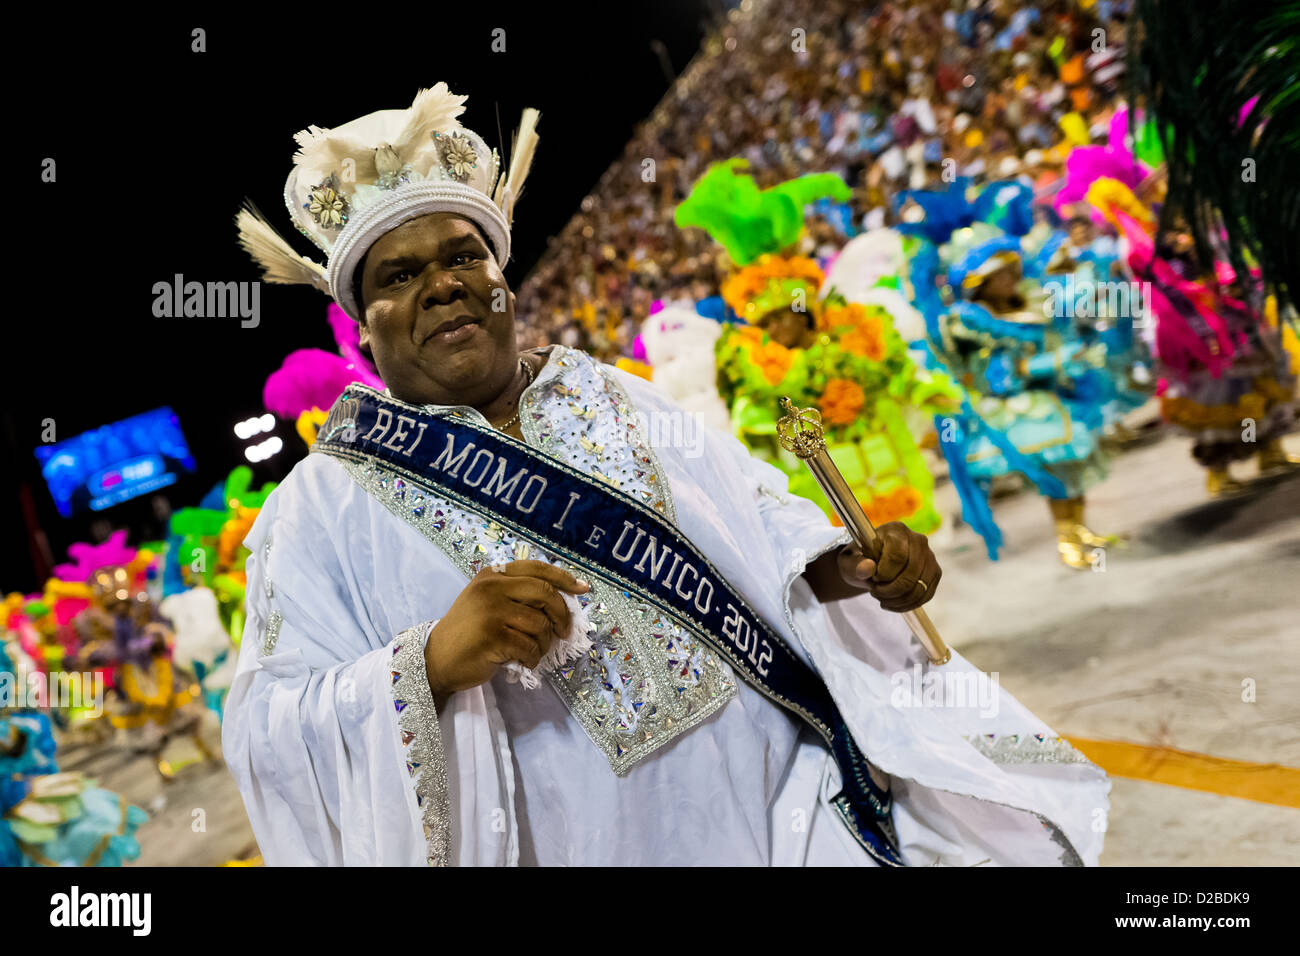 King Momo performs during the Carnival parade at the Sambadrome in Rio de Janeiro, Brazil. Stock Photo